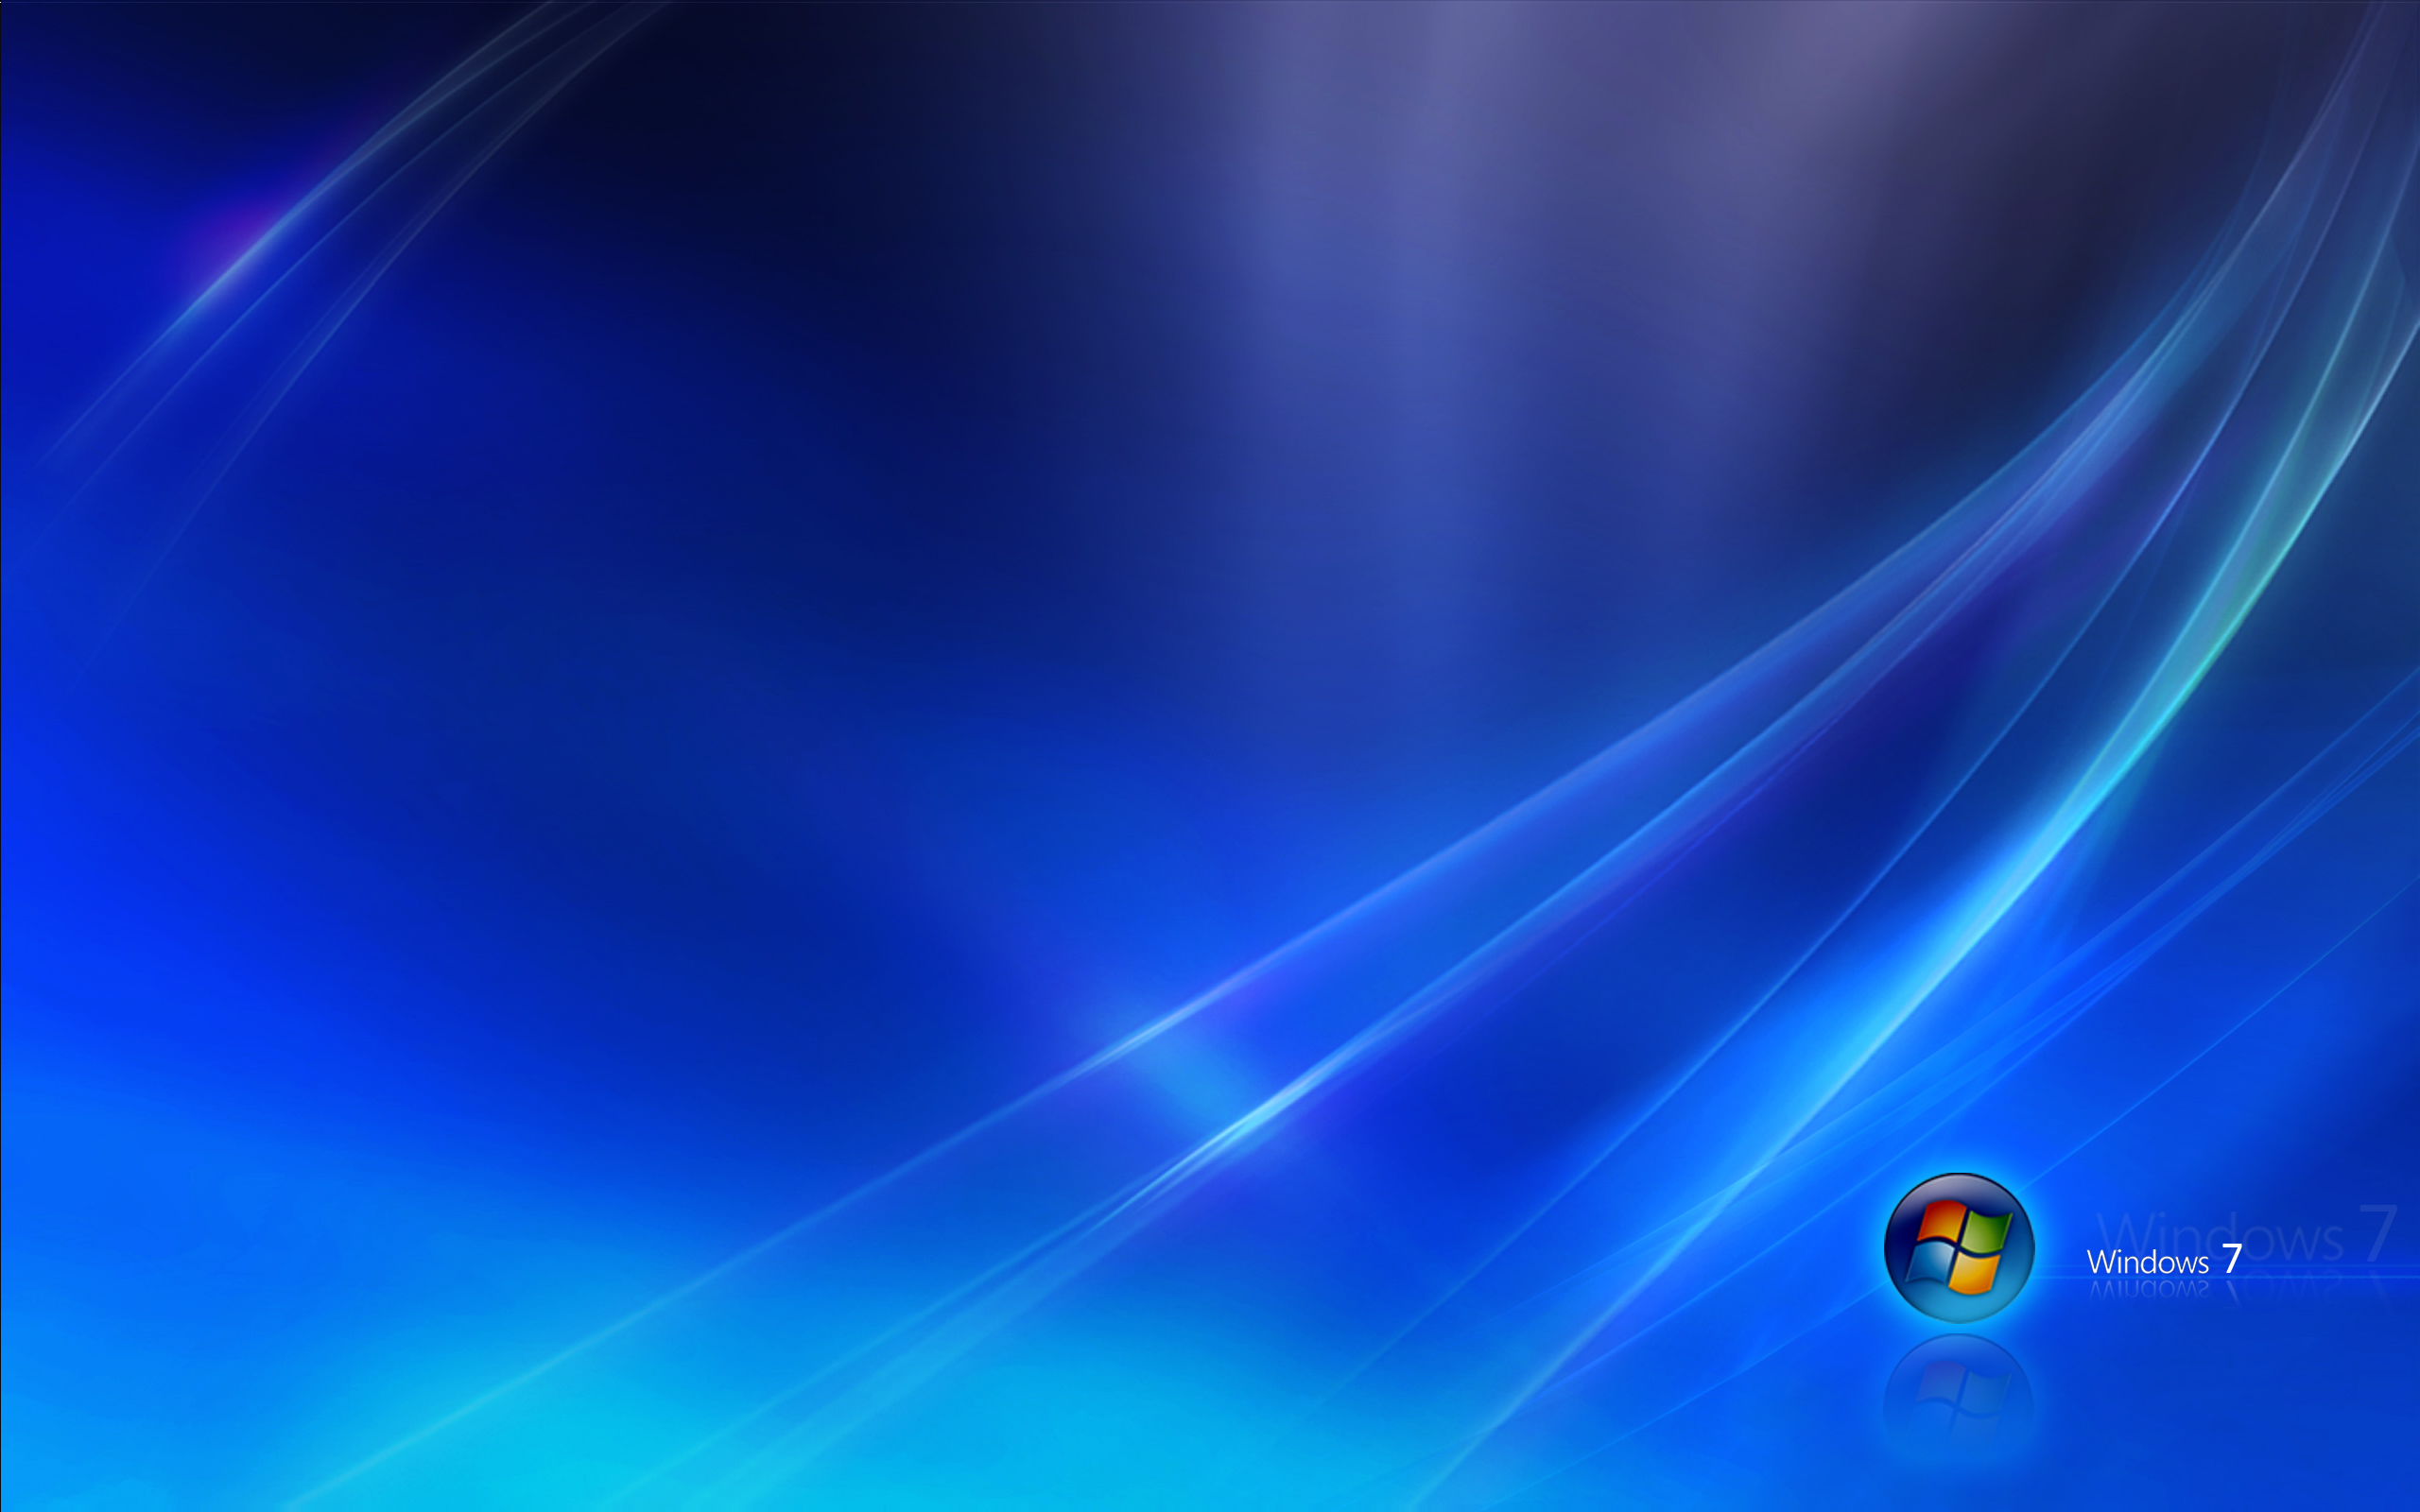 High Resolution Desktop Windows 7 - Bing images